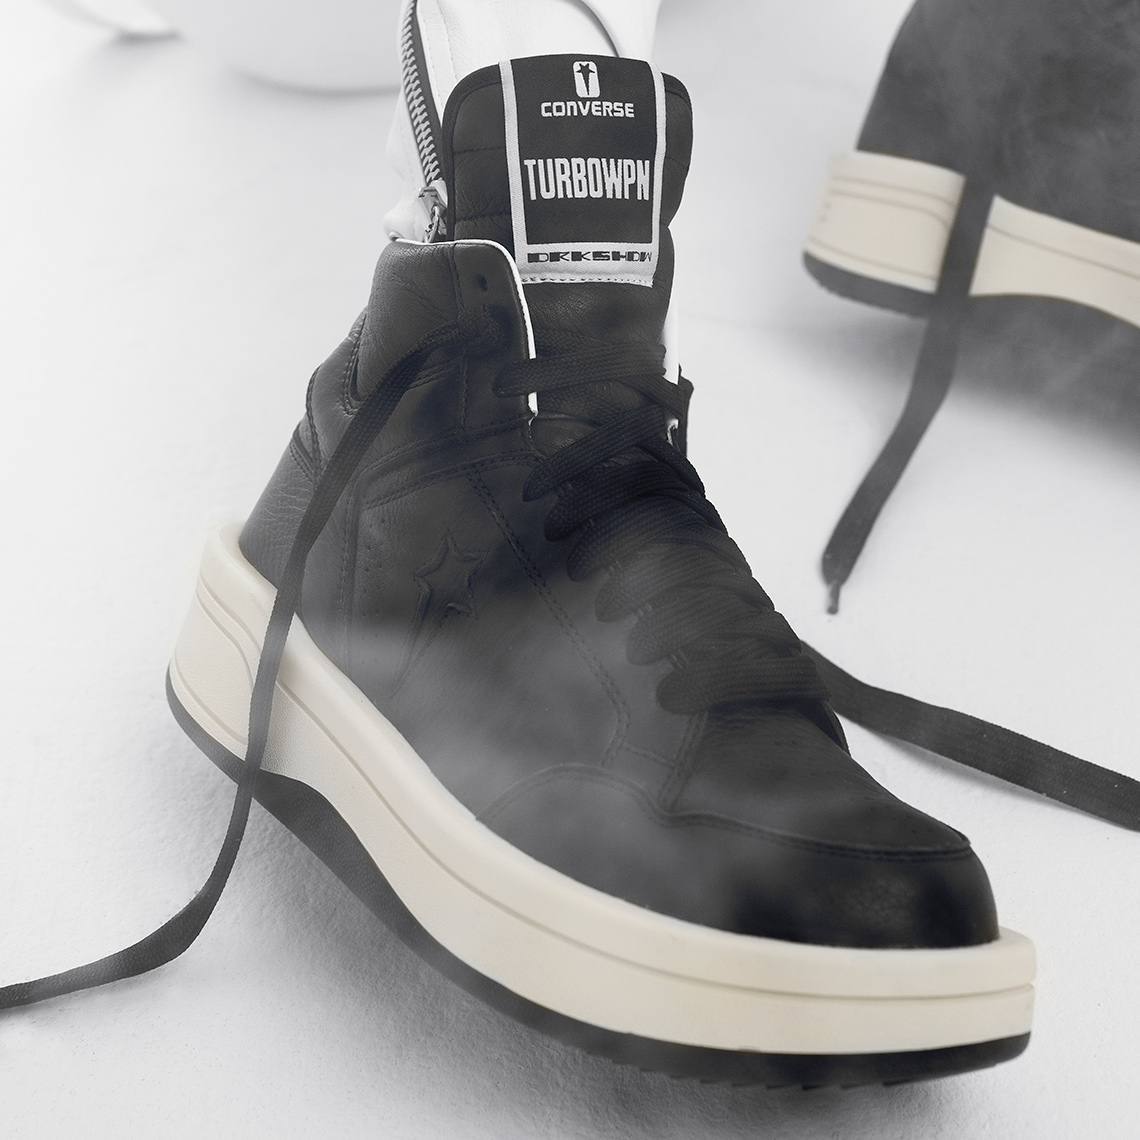 Rick Owens Converse TURBOWPN Release Date | SneakerNews.com